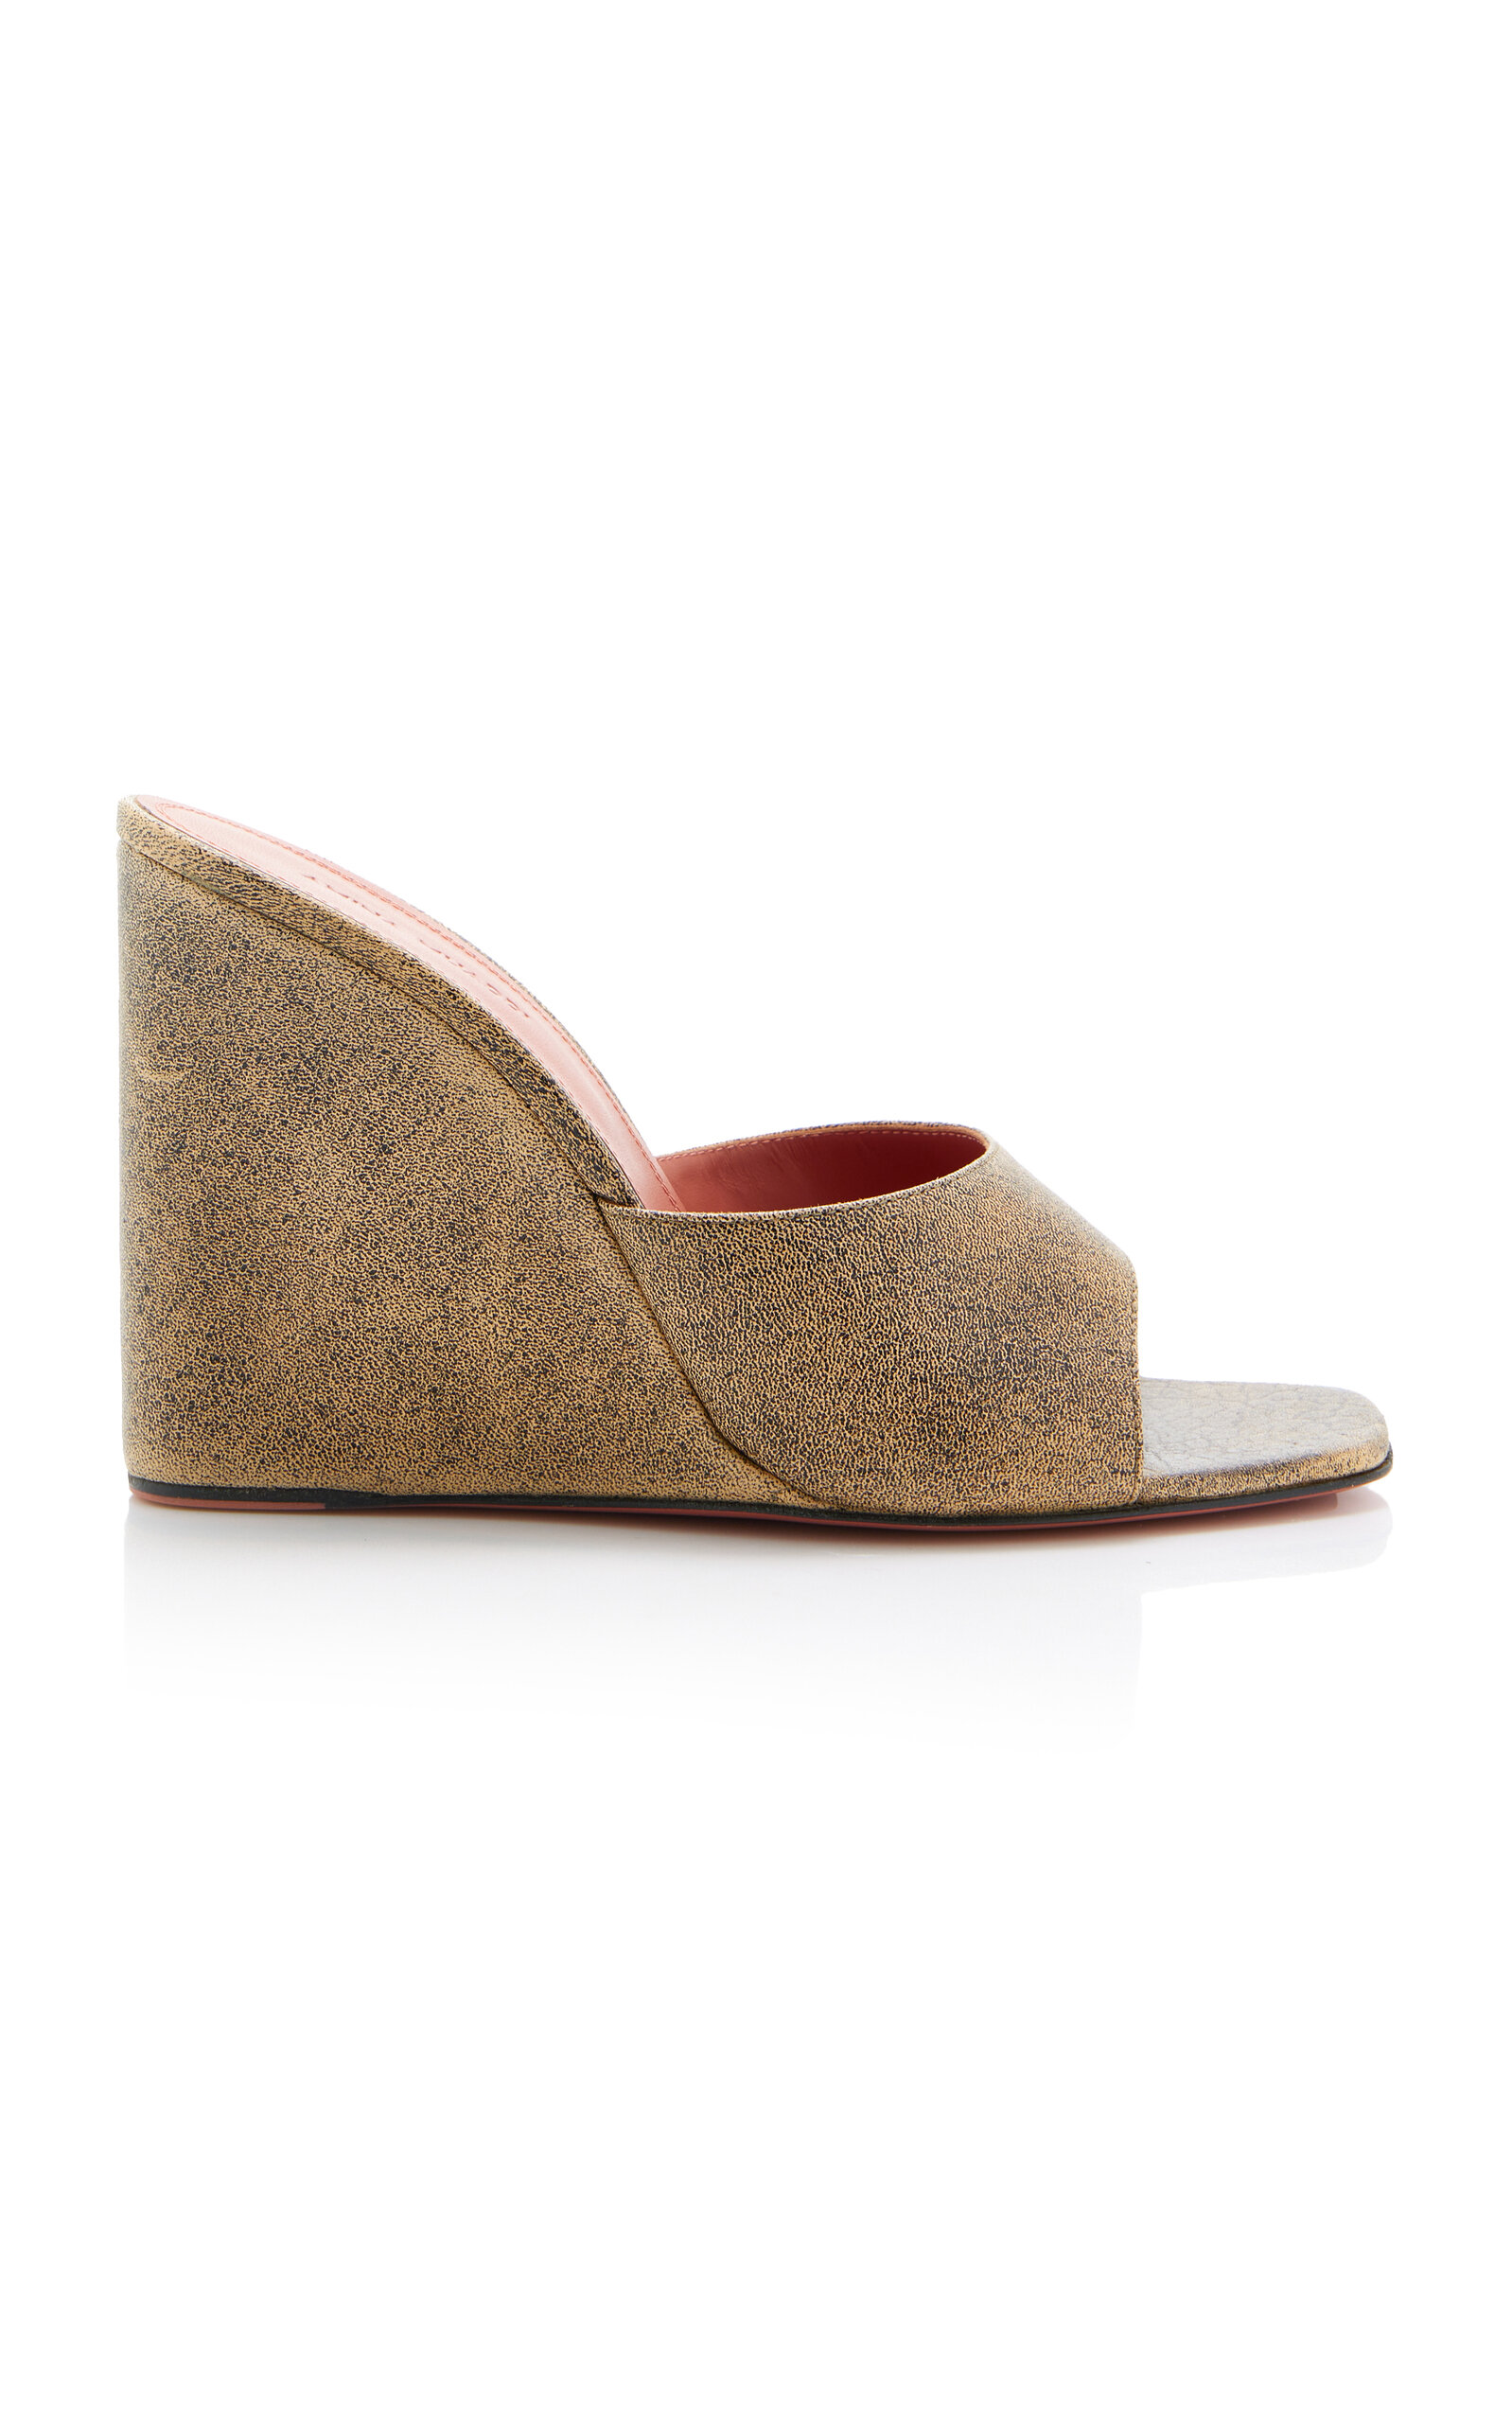 Lupita Leather Wedge Sandals